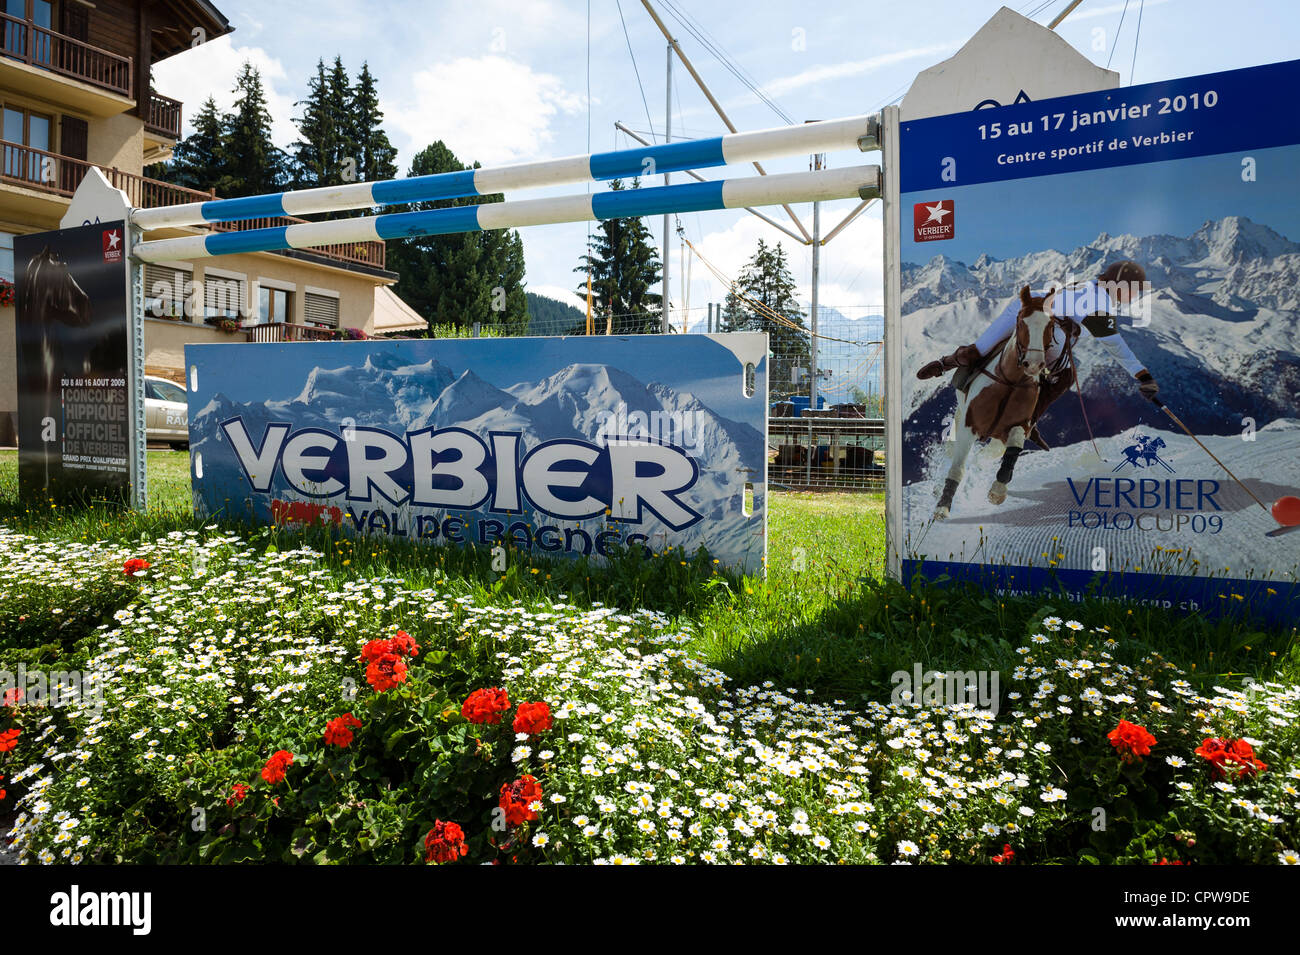 Verbier sign in Verbier, Swiss mountains, Switzerland Stock Photo